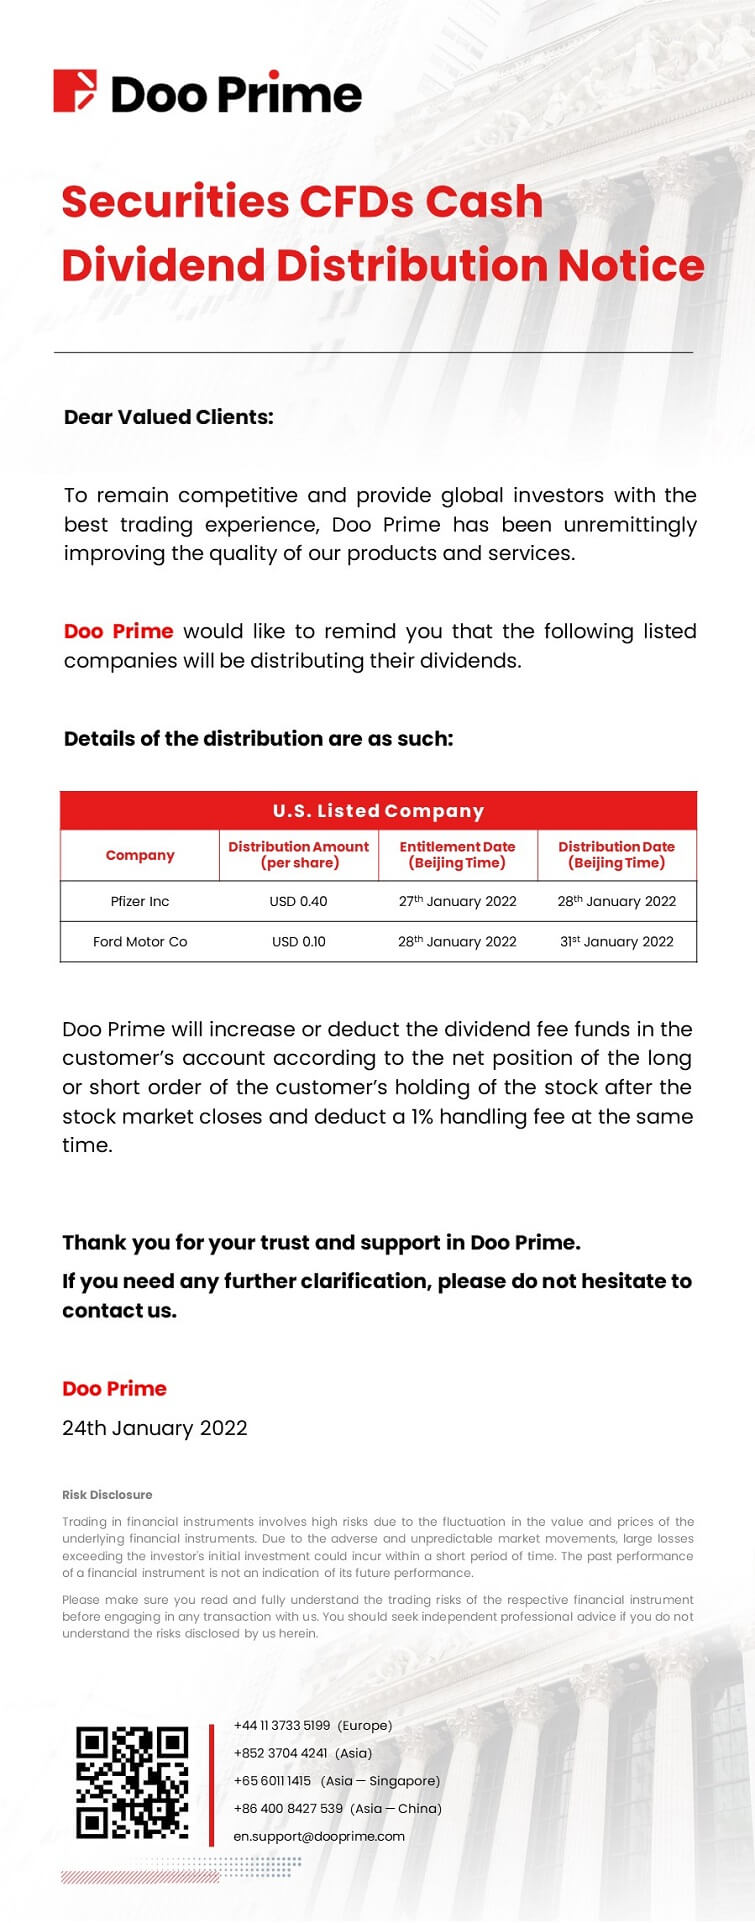 Doo Prime Securities CFDs Cash Dividend Distribution Notice